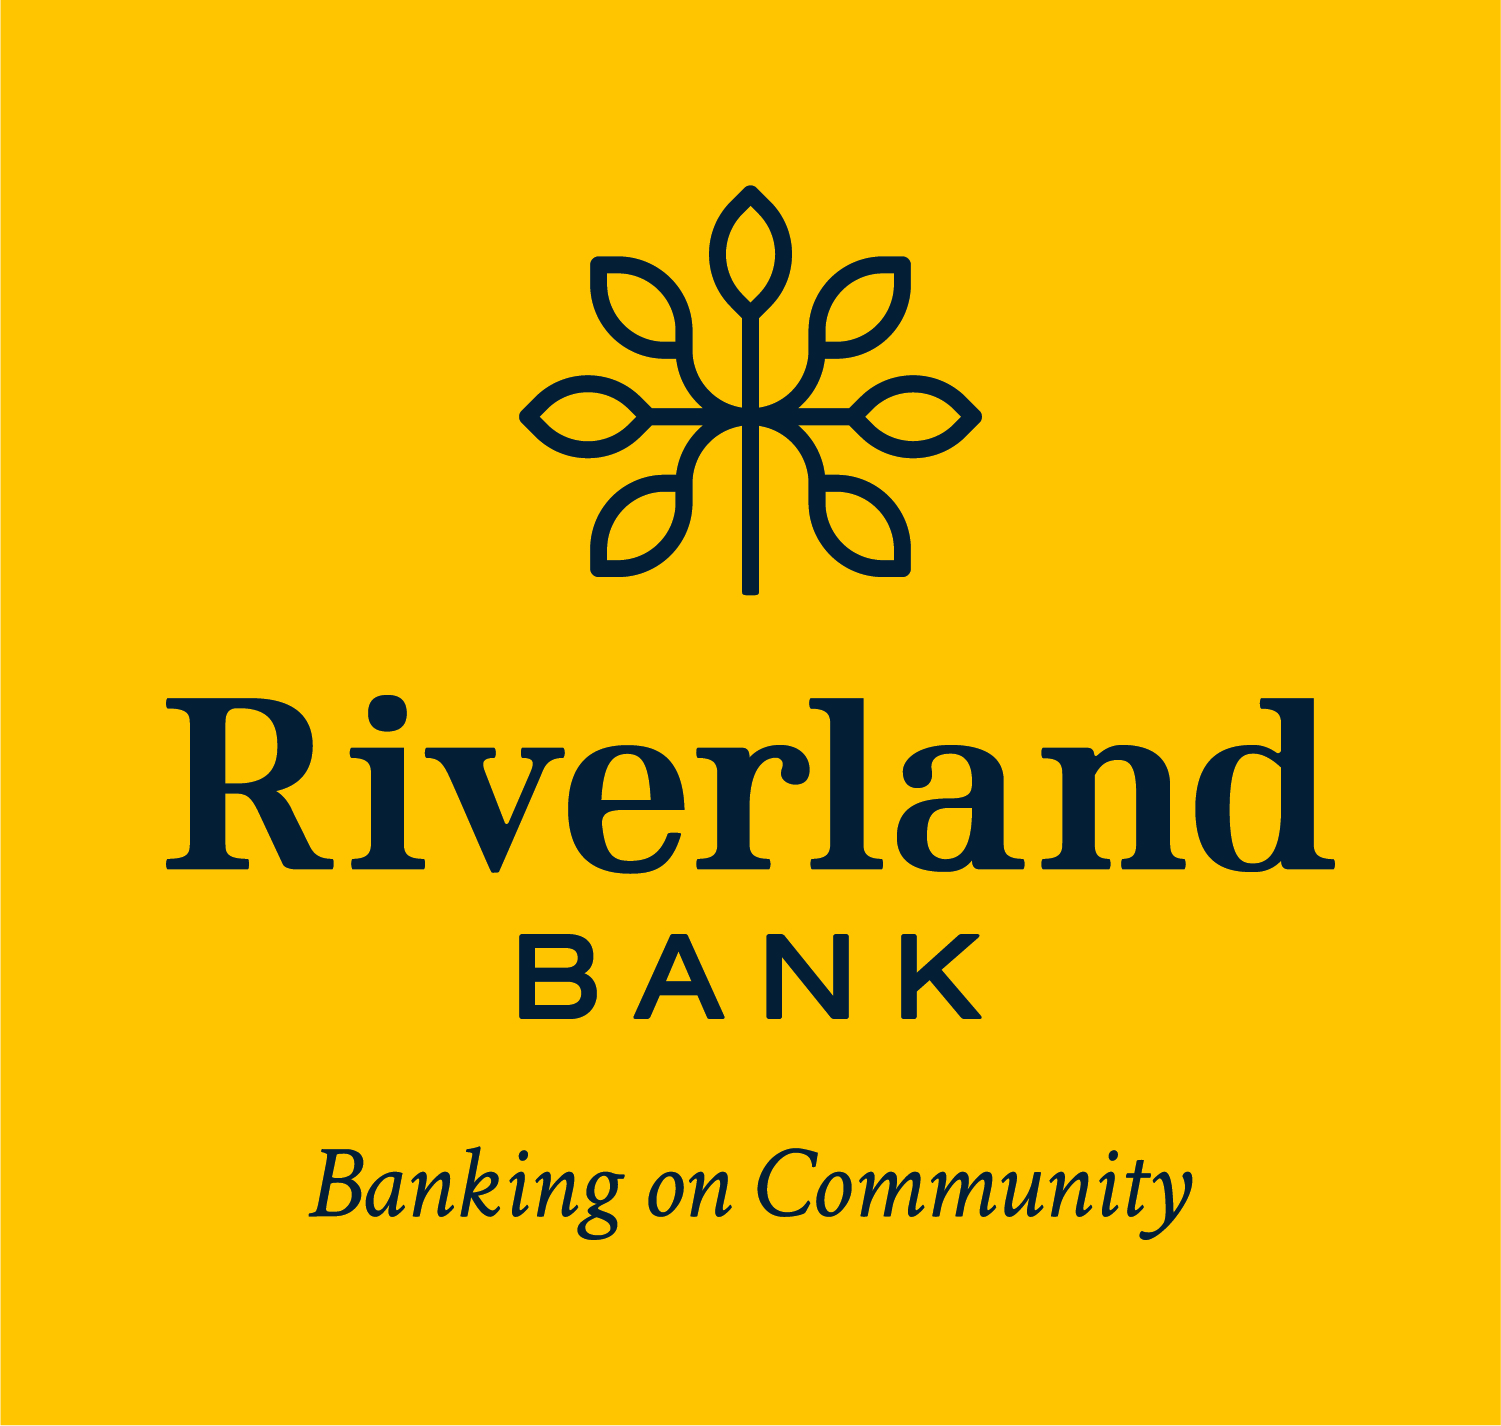 Riverland Bank